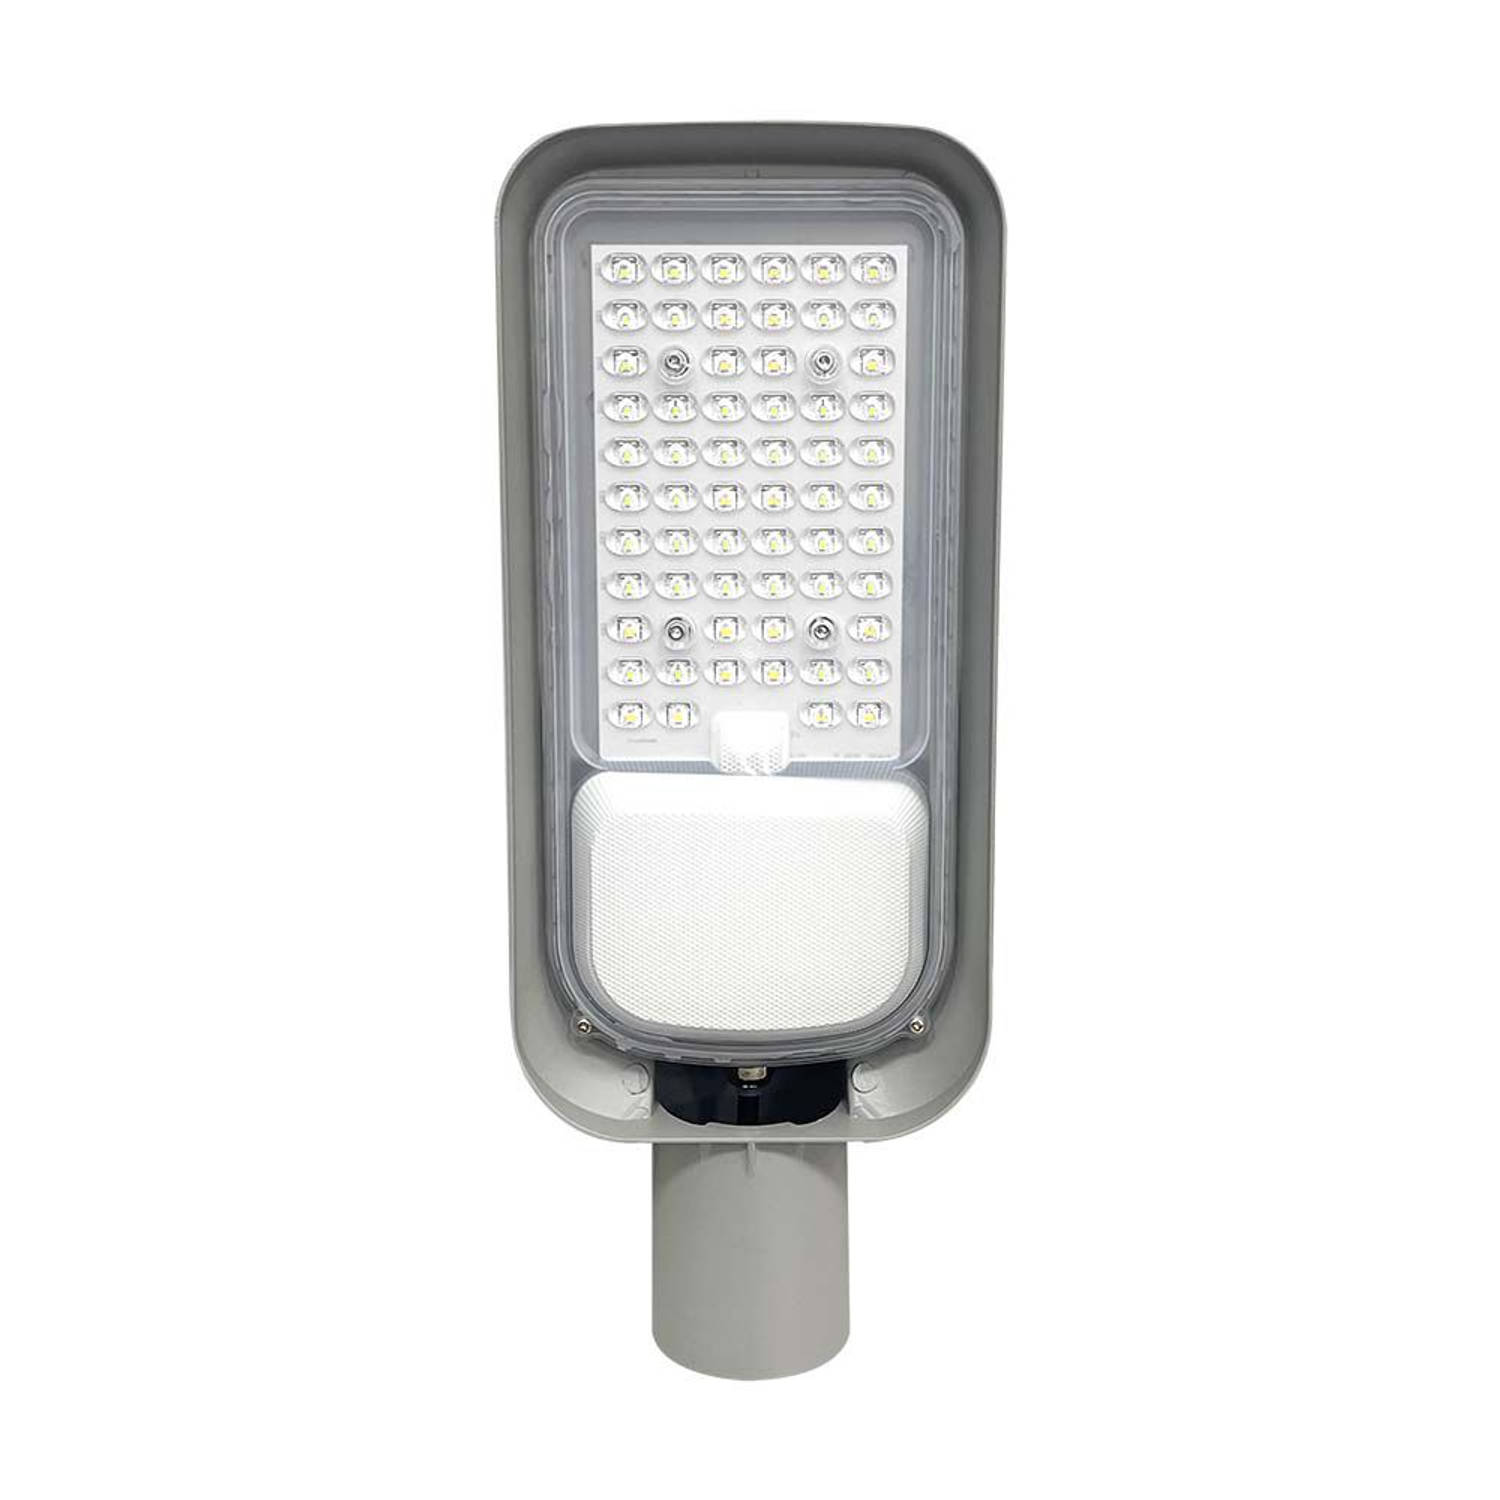 V-TAC VT-150030ST LED Straatverlichting - Slim Straatverlichting - IP65 - Zwart - 30 Watt - 2505 Lumen - 4000K